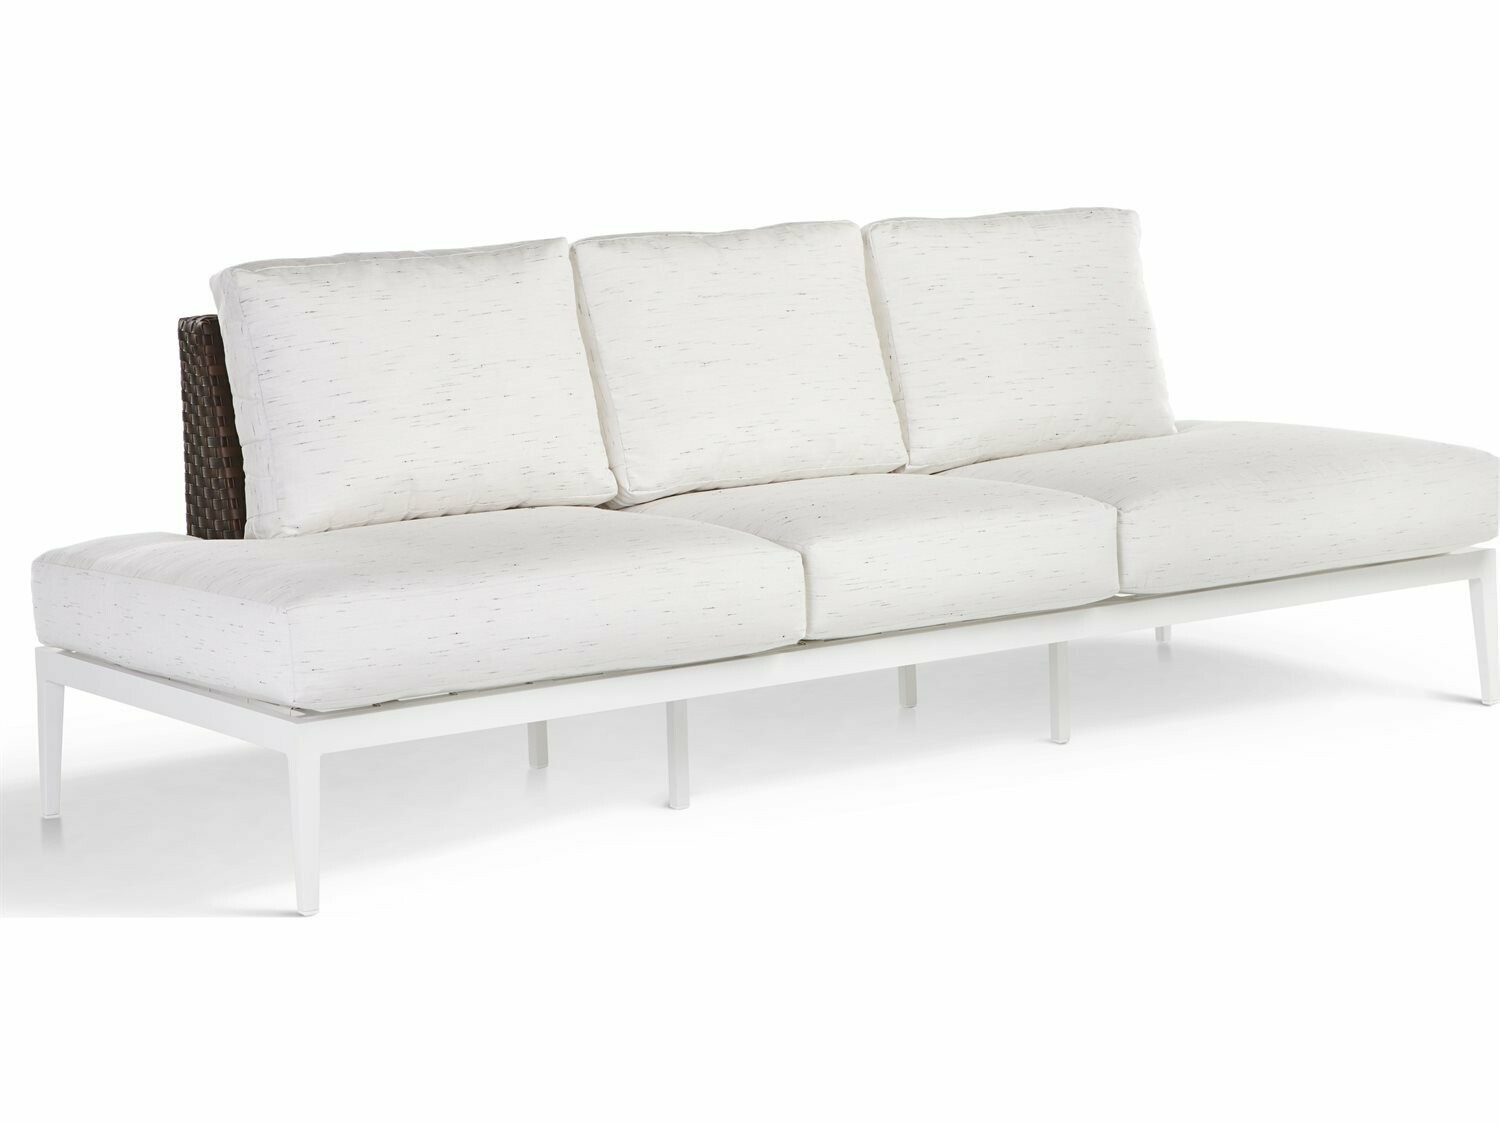 South Sea Rattan Stevie Wicker Modular Sofa with Wraparound Cushions